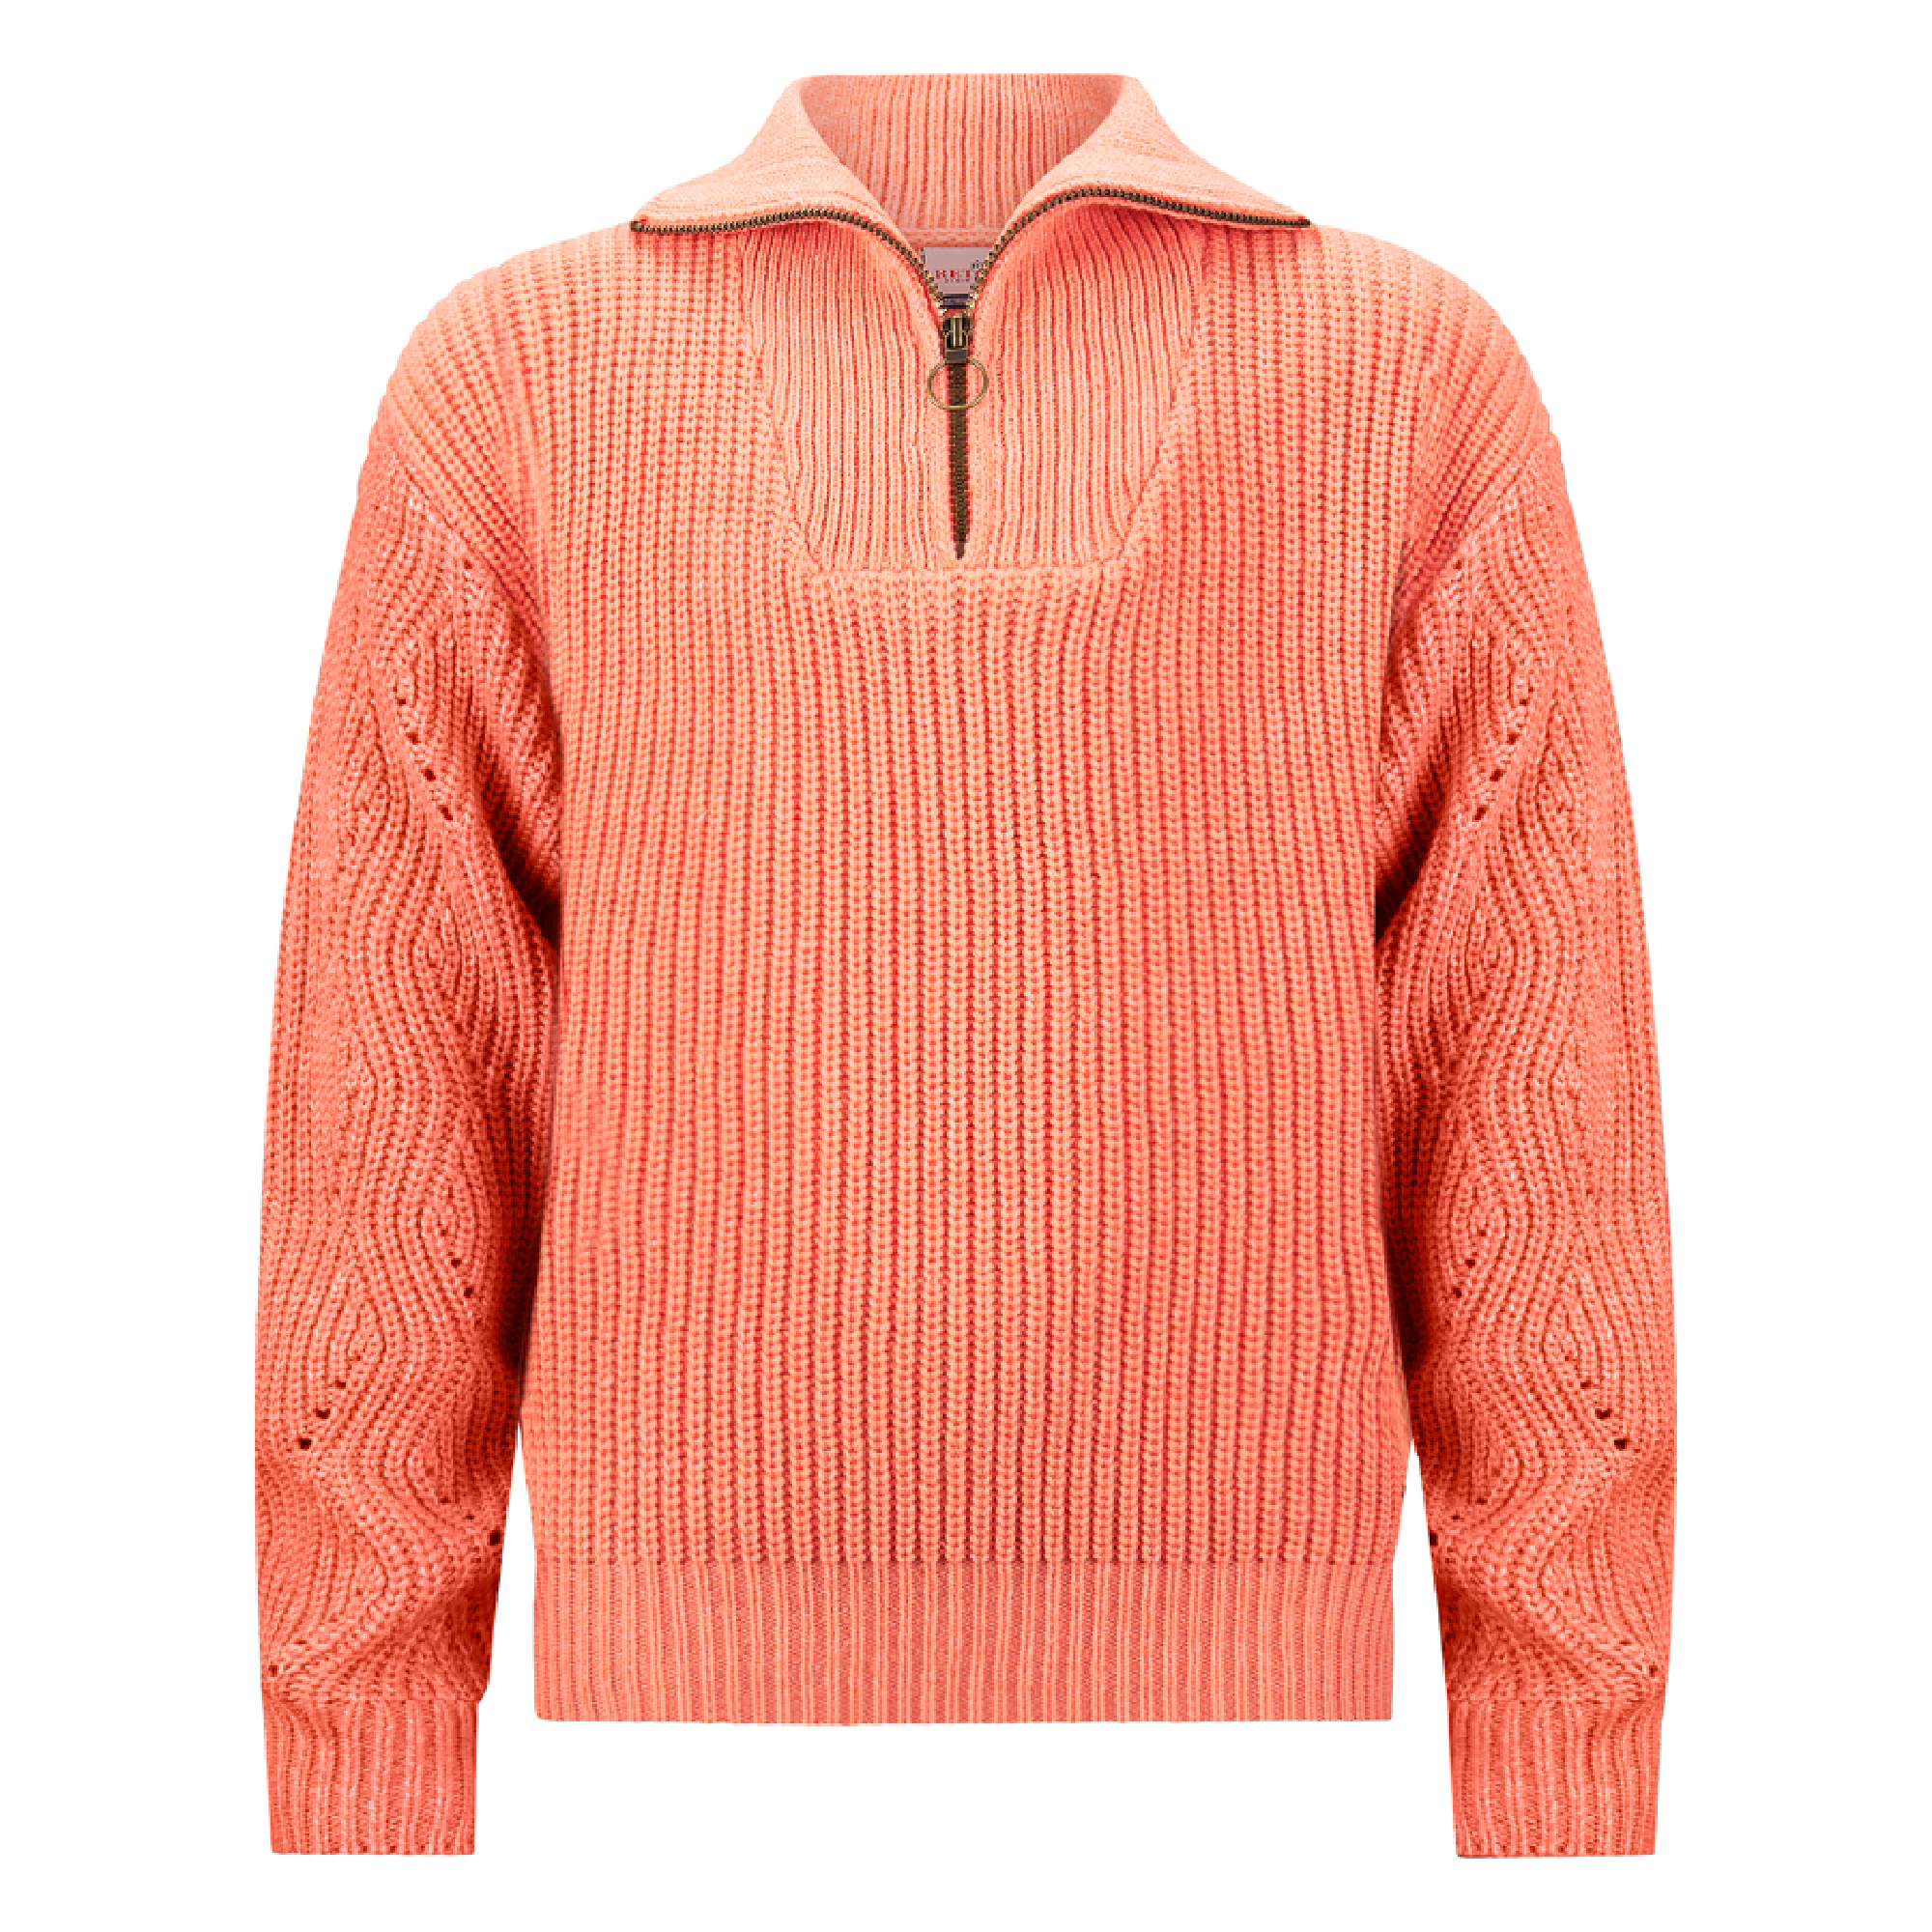 Return Knitted skippers sweater Rosella